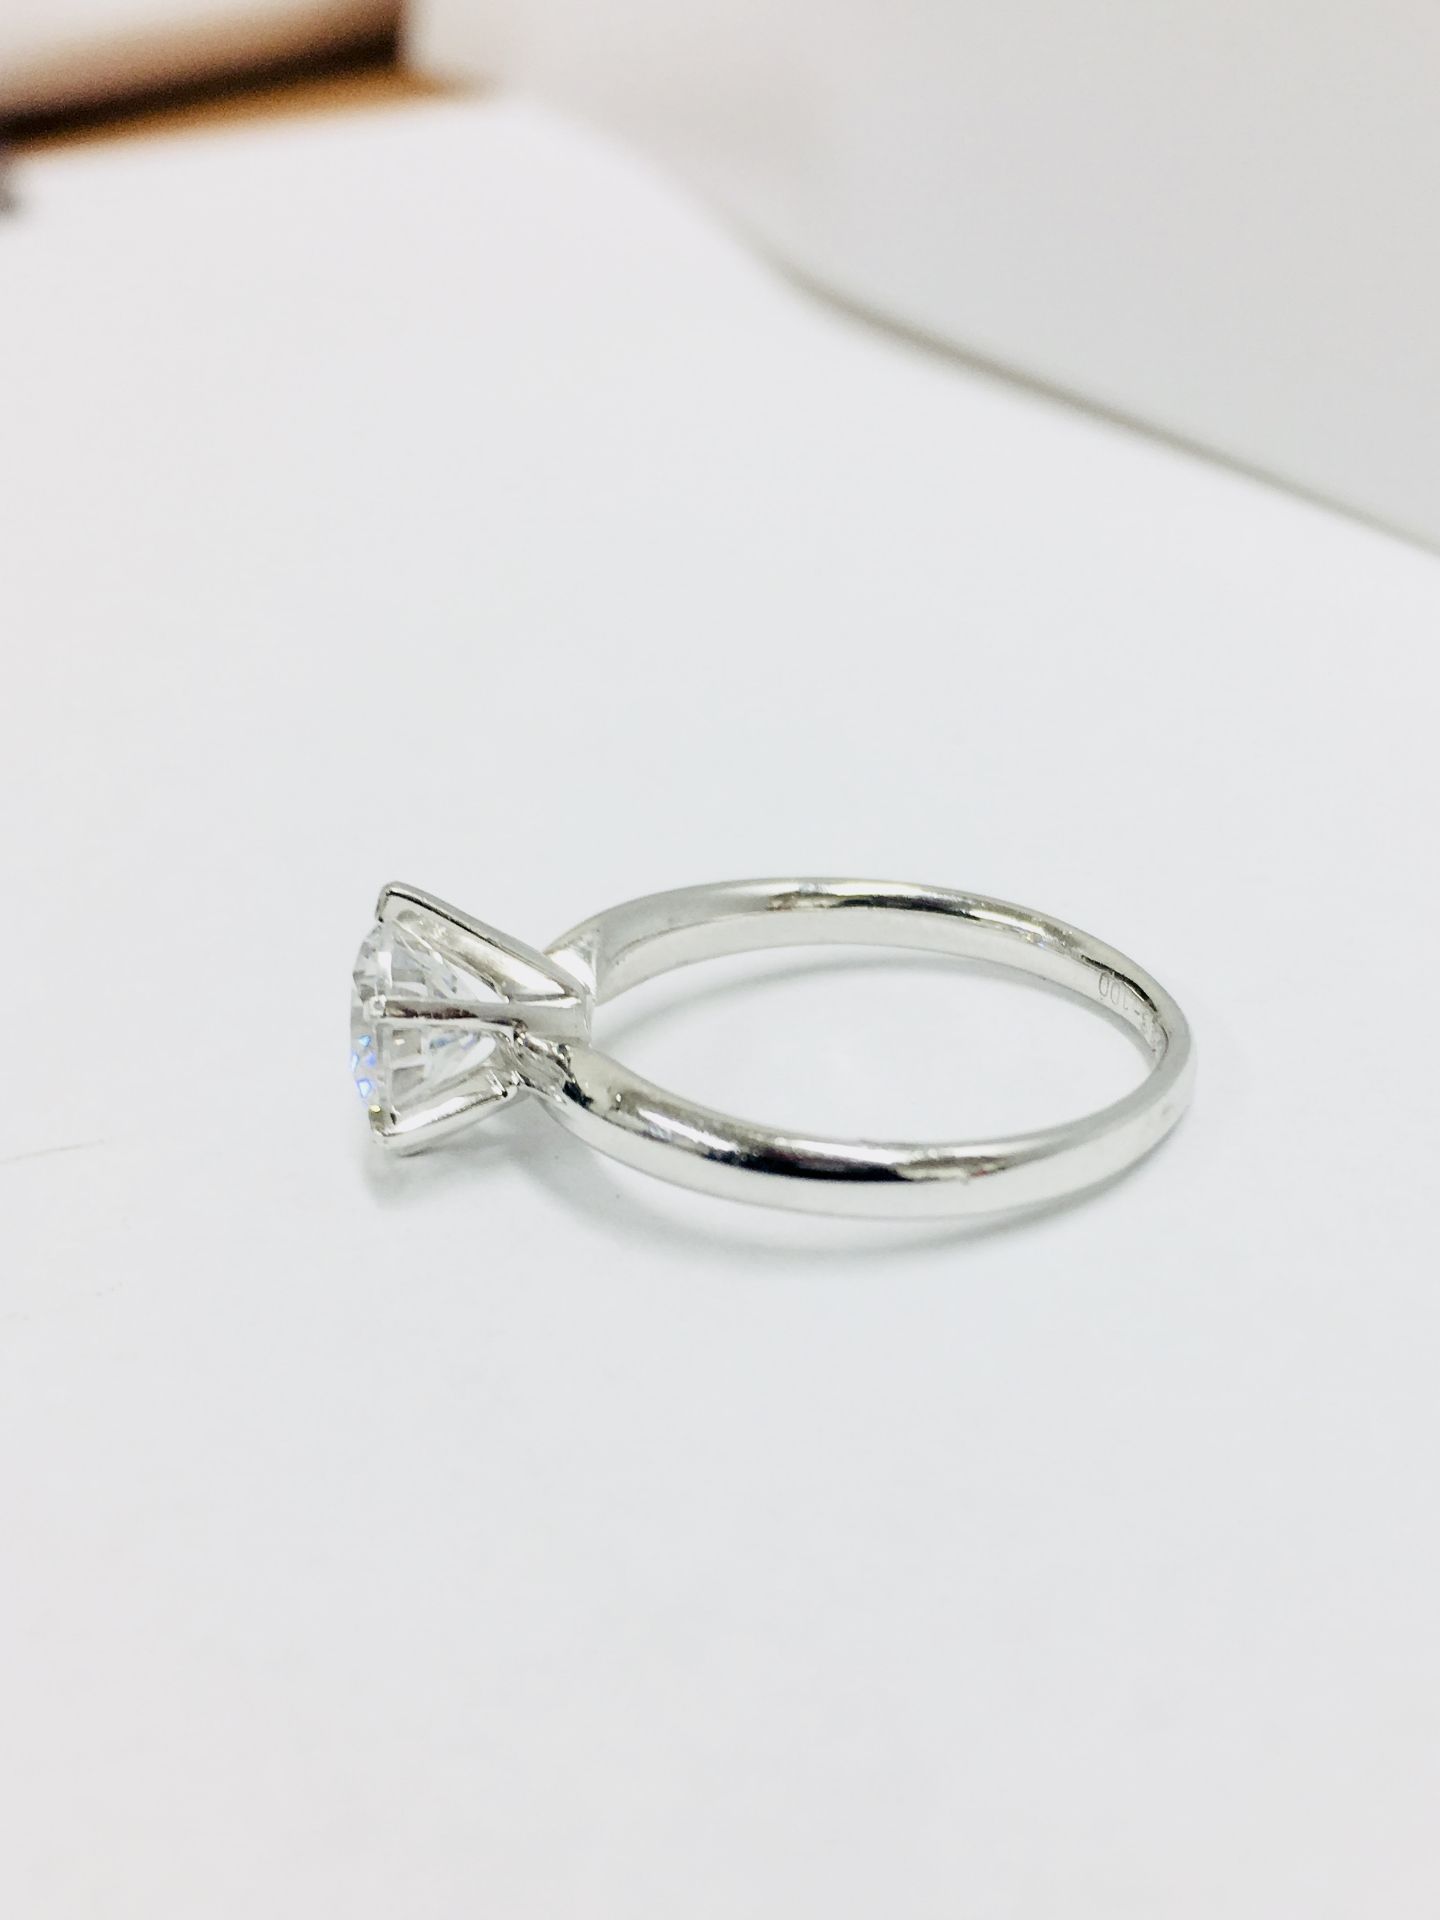 Platinum diamond solitaire ring 6 claw,0.50ct brilliant cut diamond h colour vs clarity enhanced,3. - Image 2 of 3